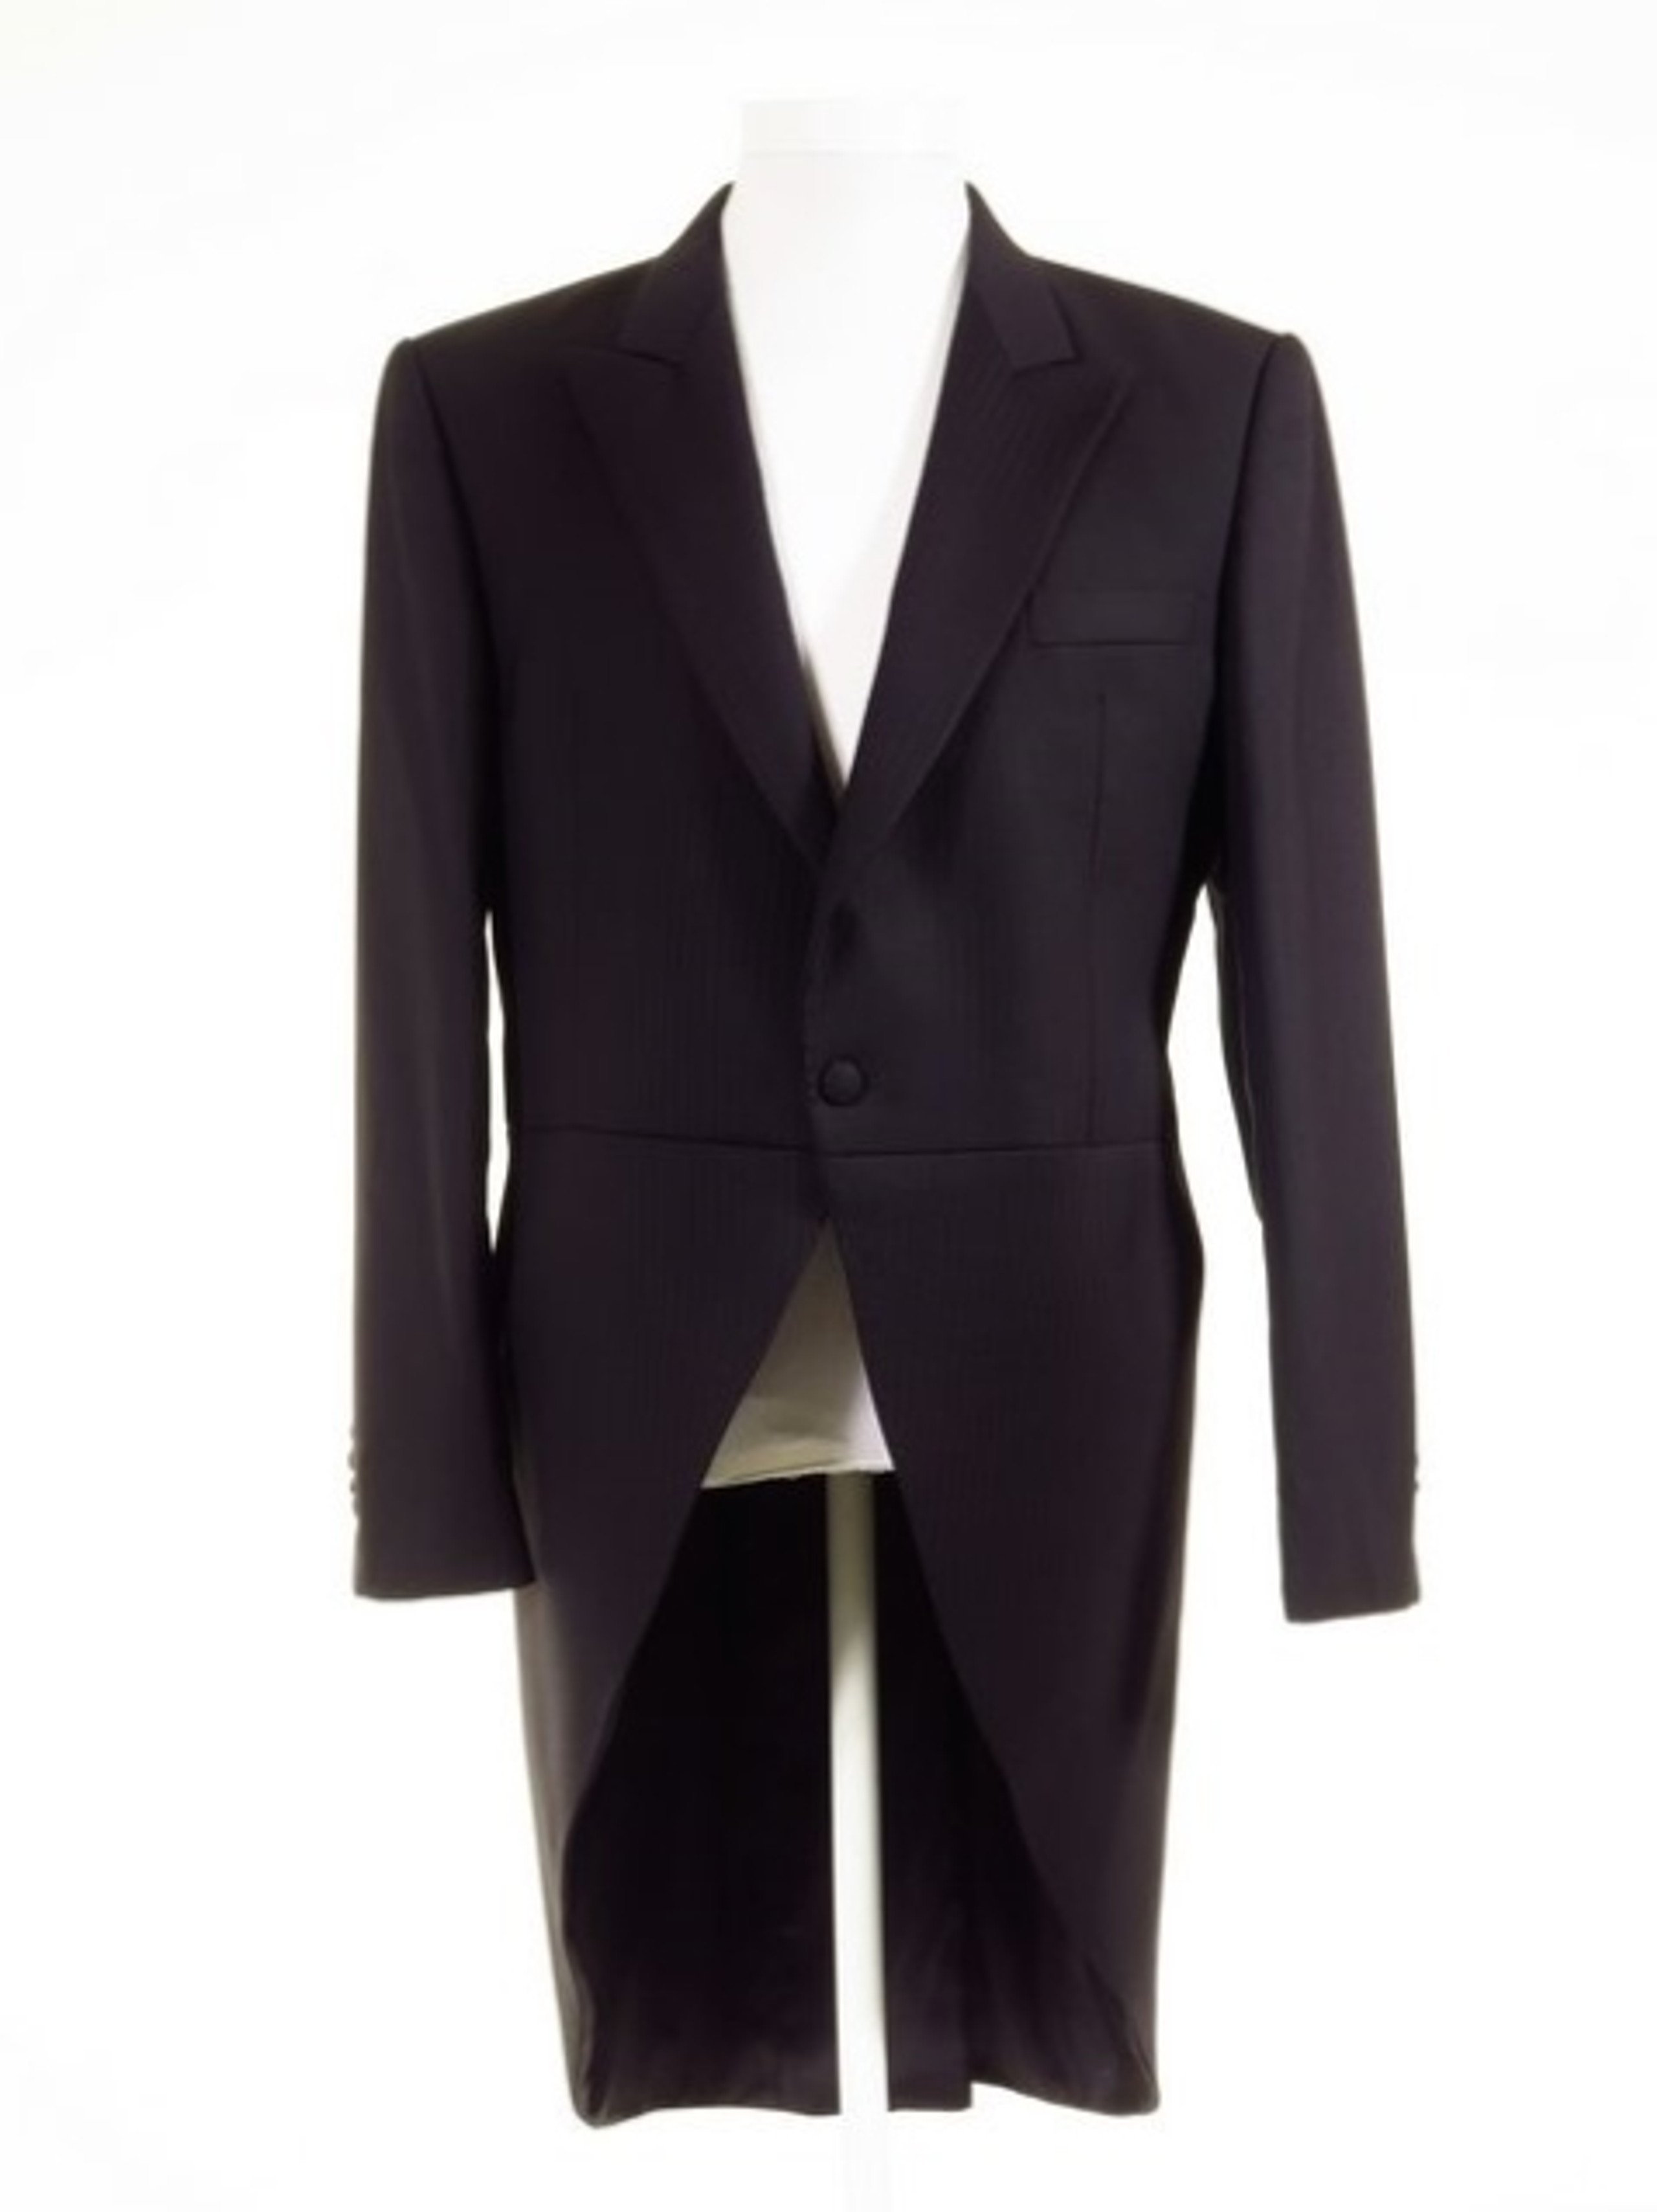 Ex-Hire Tailcoat Navy Herringbone Wool Morning Coat - All Sizes £59 ...